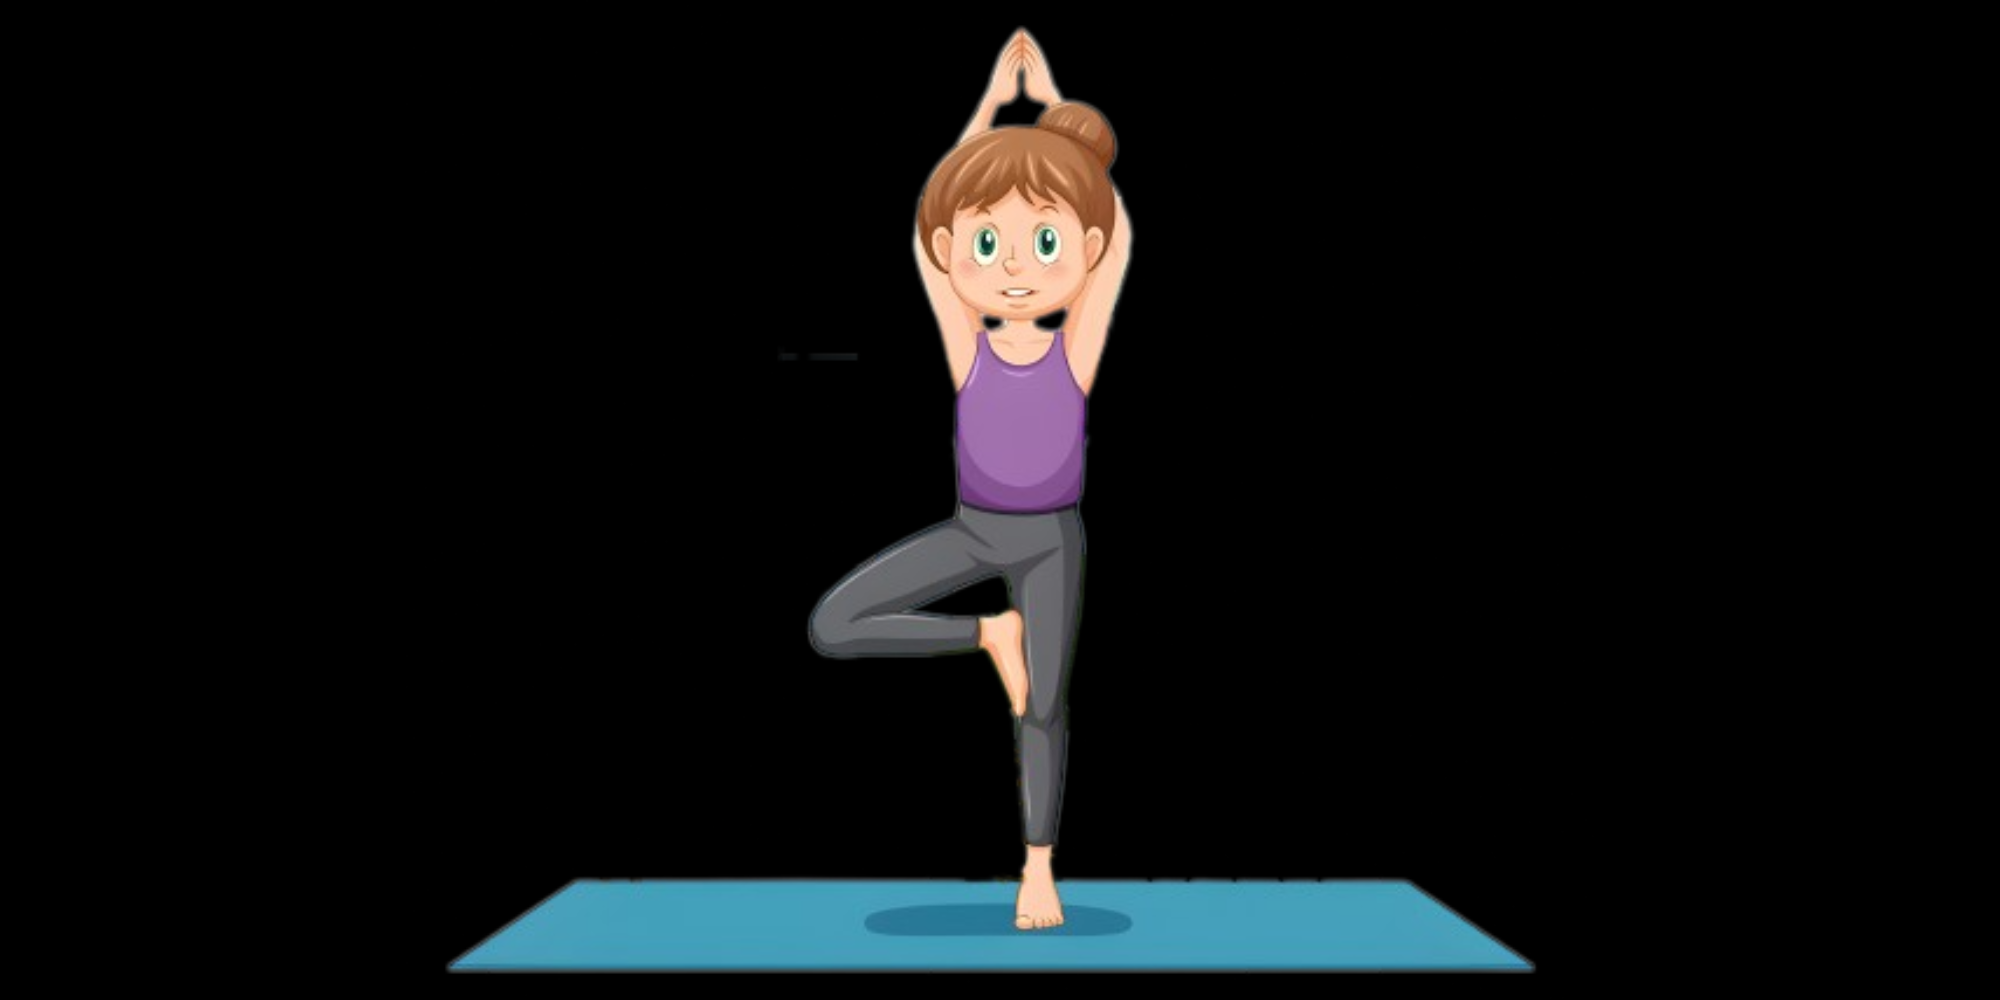 Benefits Of Yoga For Kidney Stones